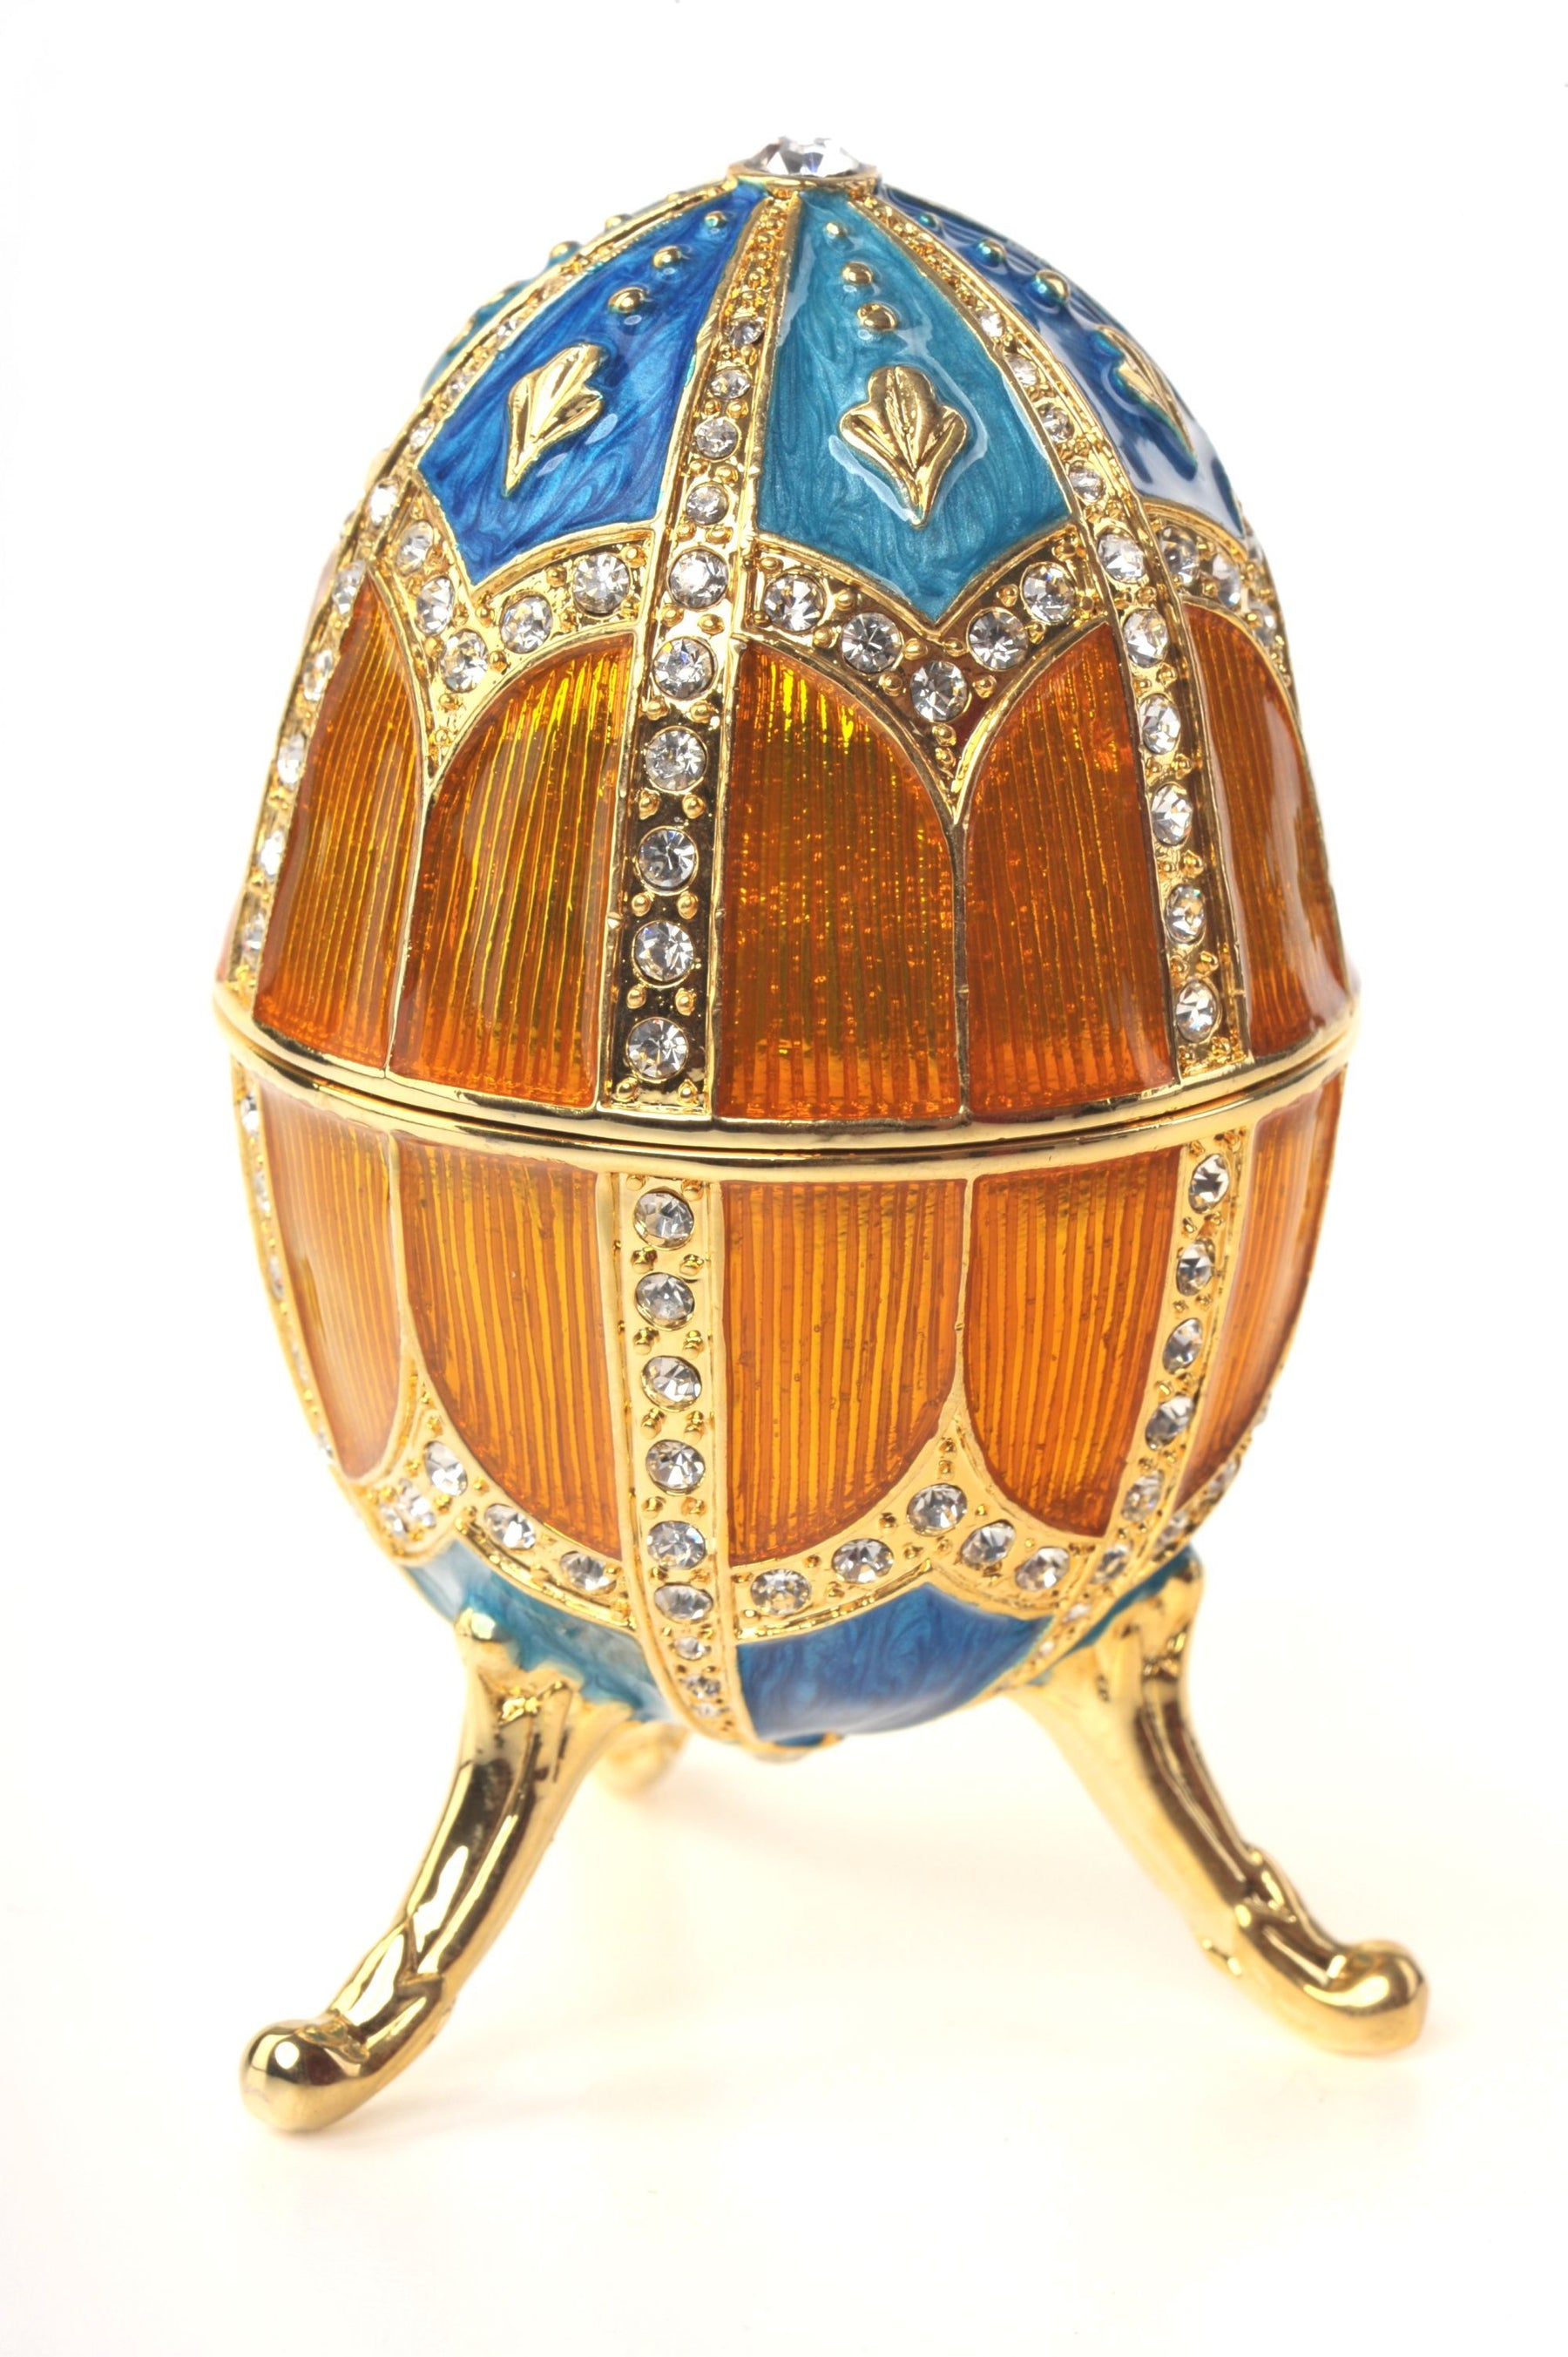 Keren Kopal Orange & Blue Faberge Egg  90.50